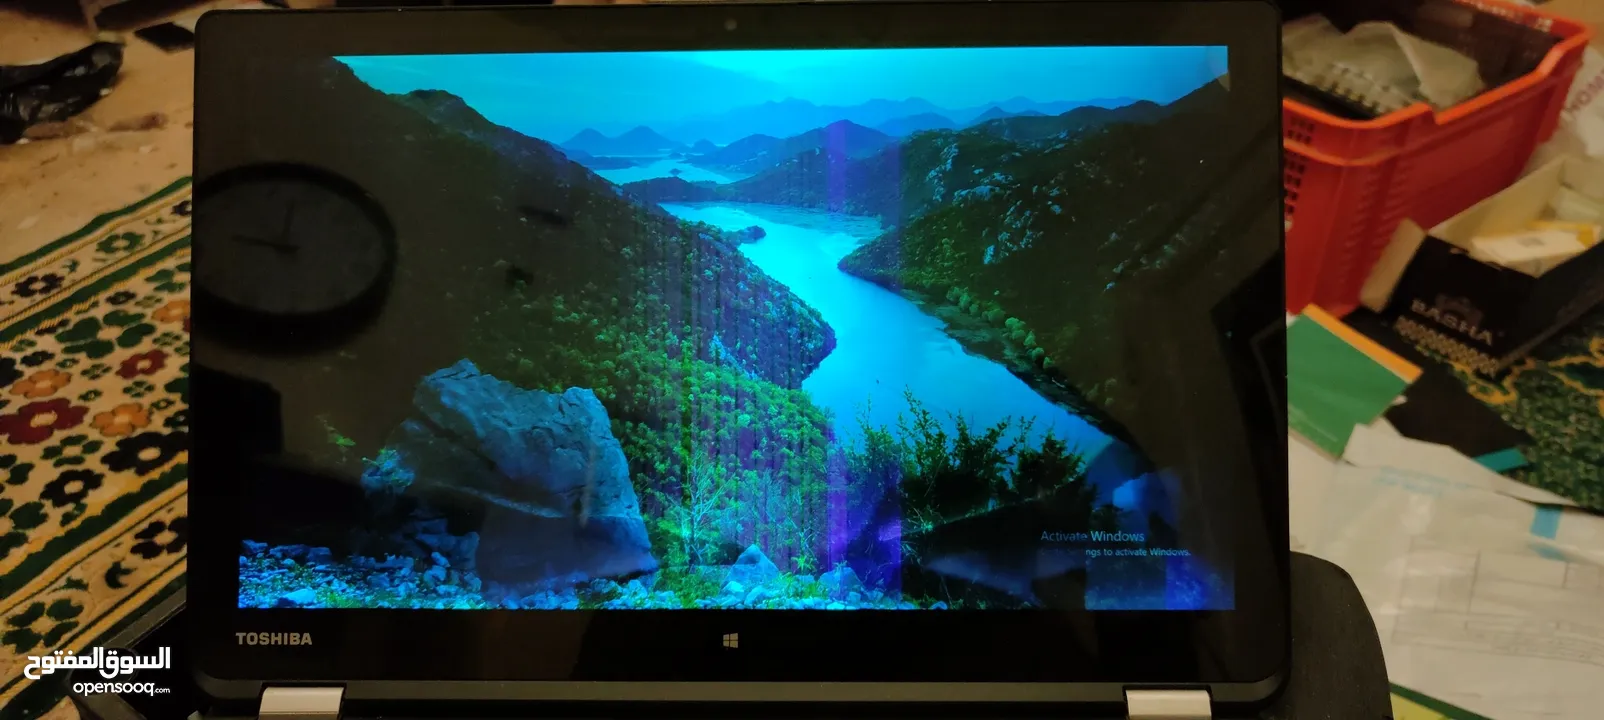 توشيبا ستالايت إنتل كور آي 5 رصاصي شاشة مقاس 15.6Toshiba satellite Intel core i5 selver 15.6 screen